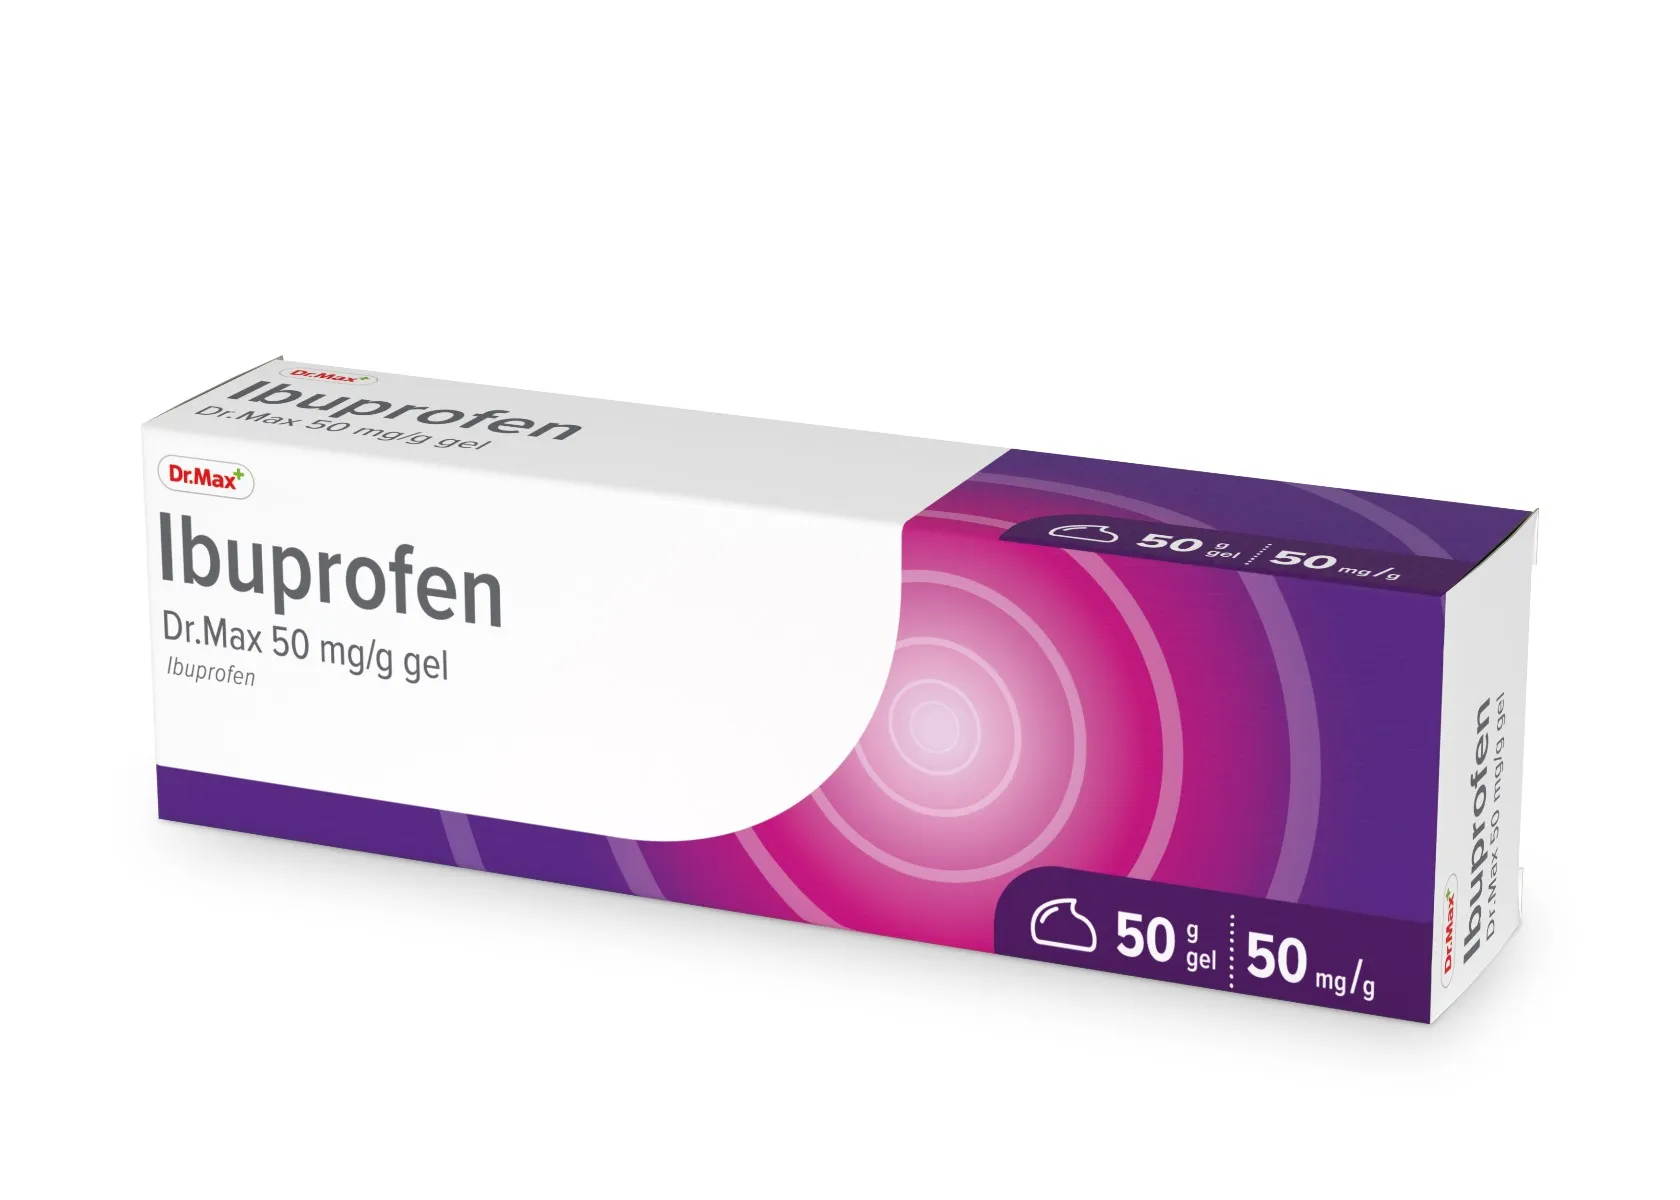 Dr.Max Ibuprofen 50mg/g Gel tub, 50g 